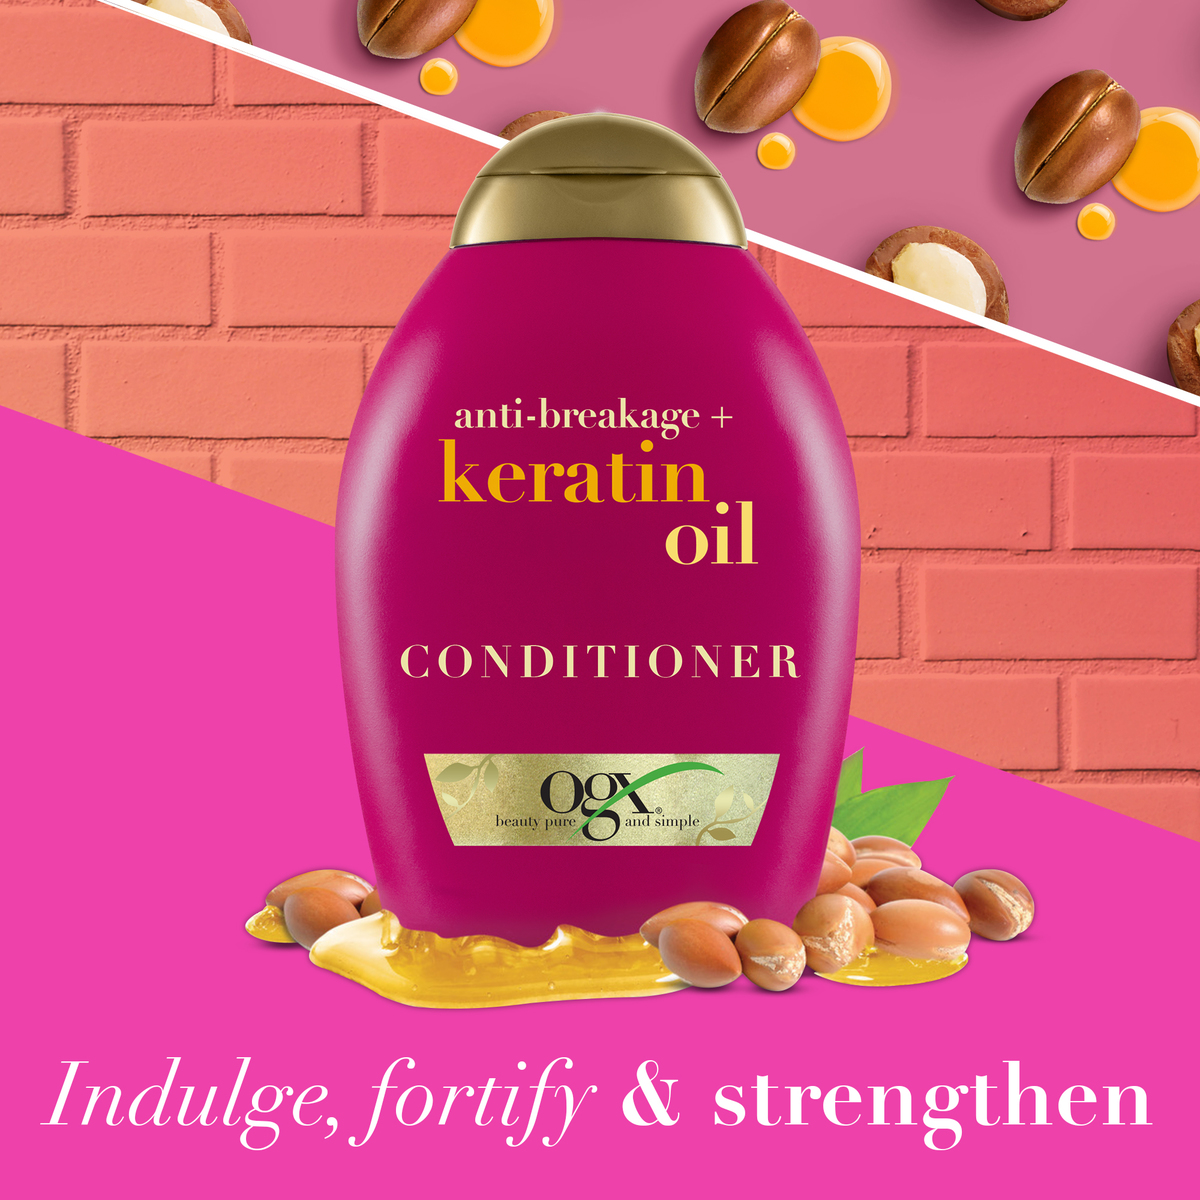 OGX Conditioner Anti Breakage + Keratin Oil 385ml